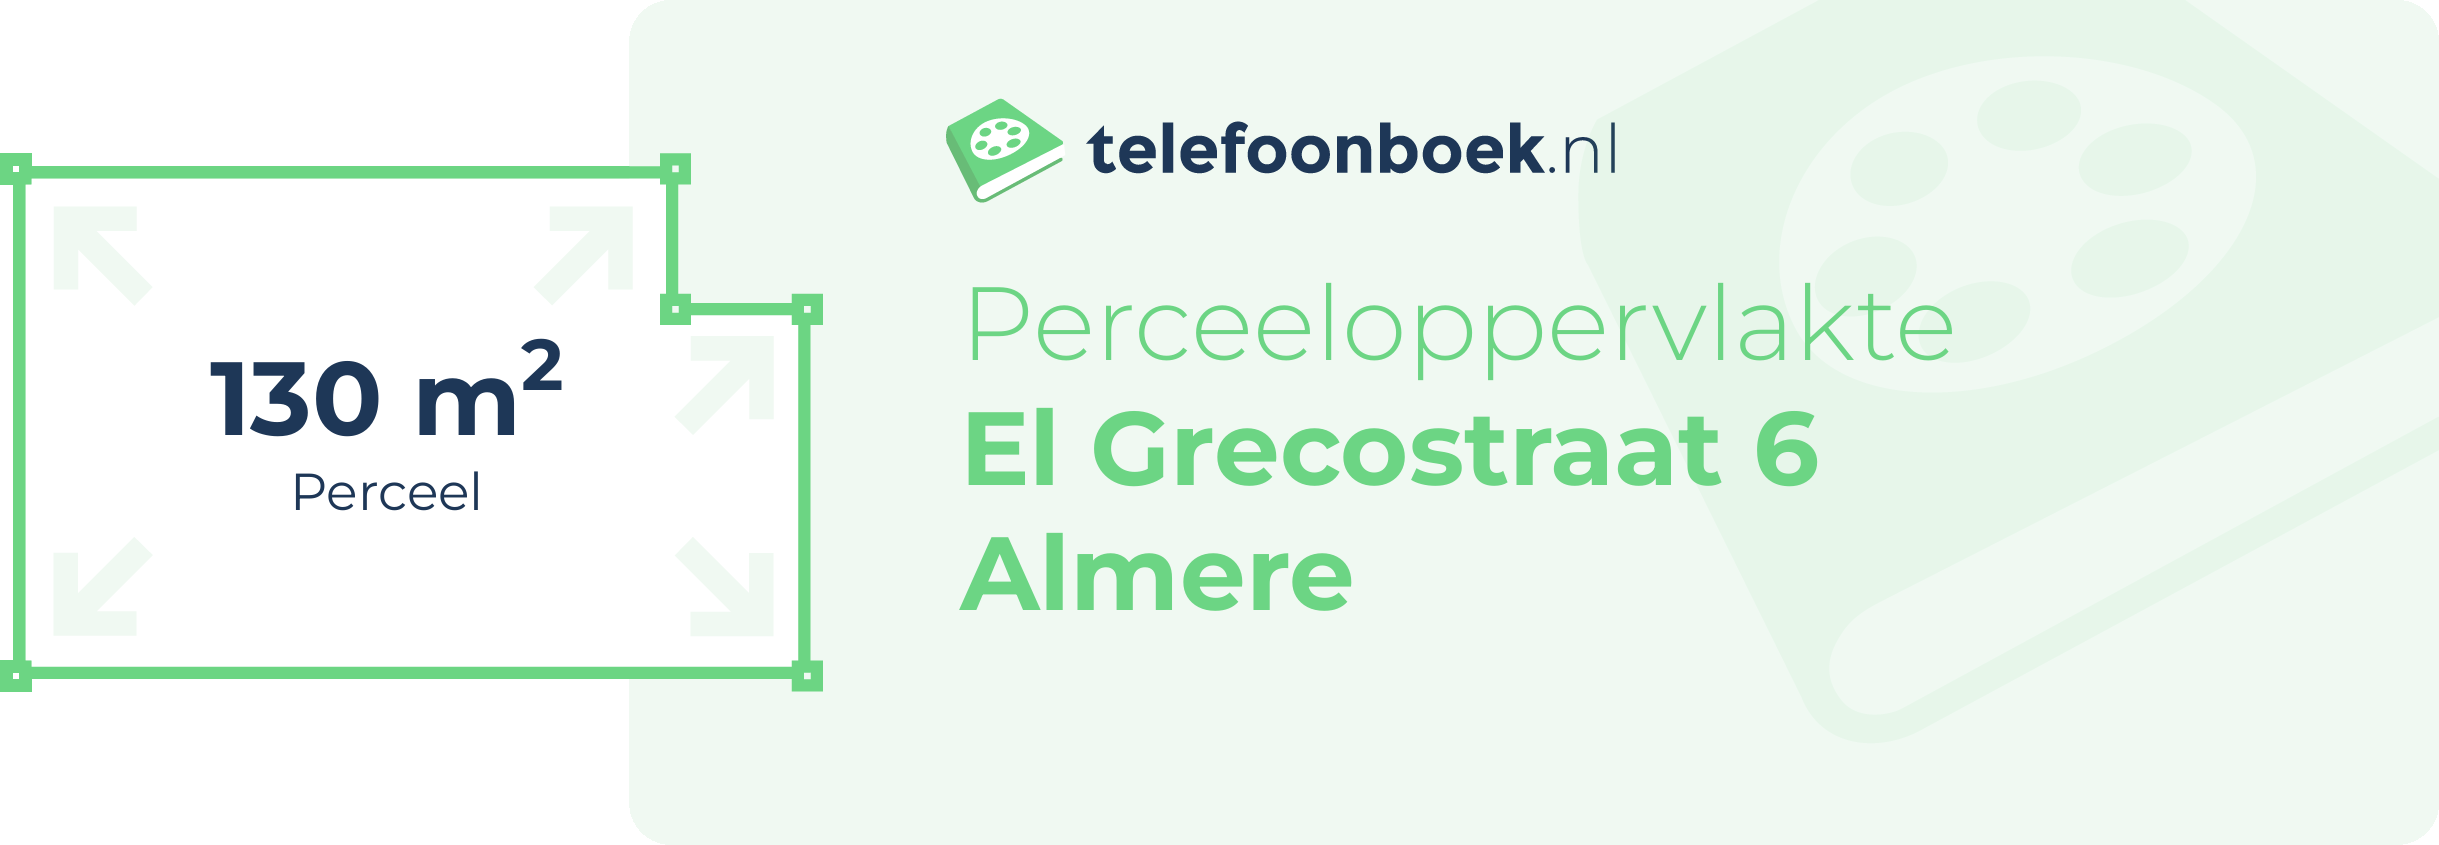 Perceeloppervlakte El Grecostraat 6 Almere